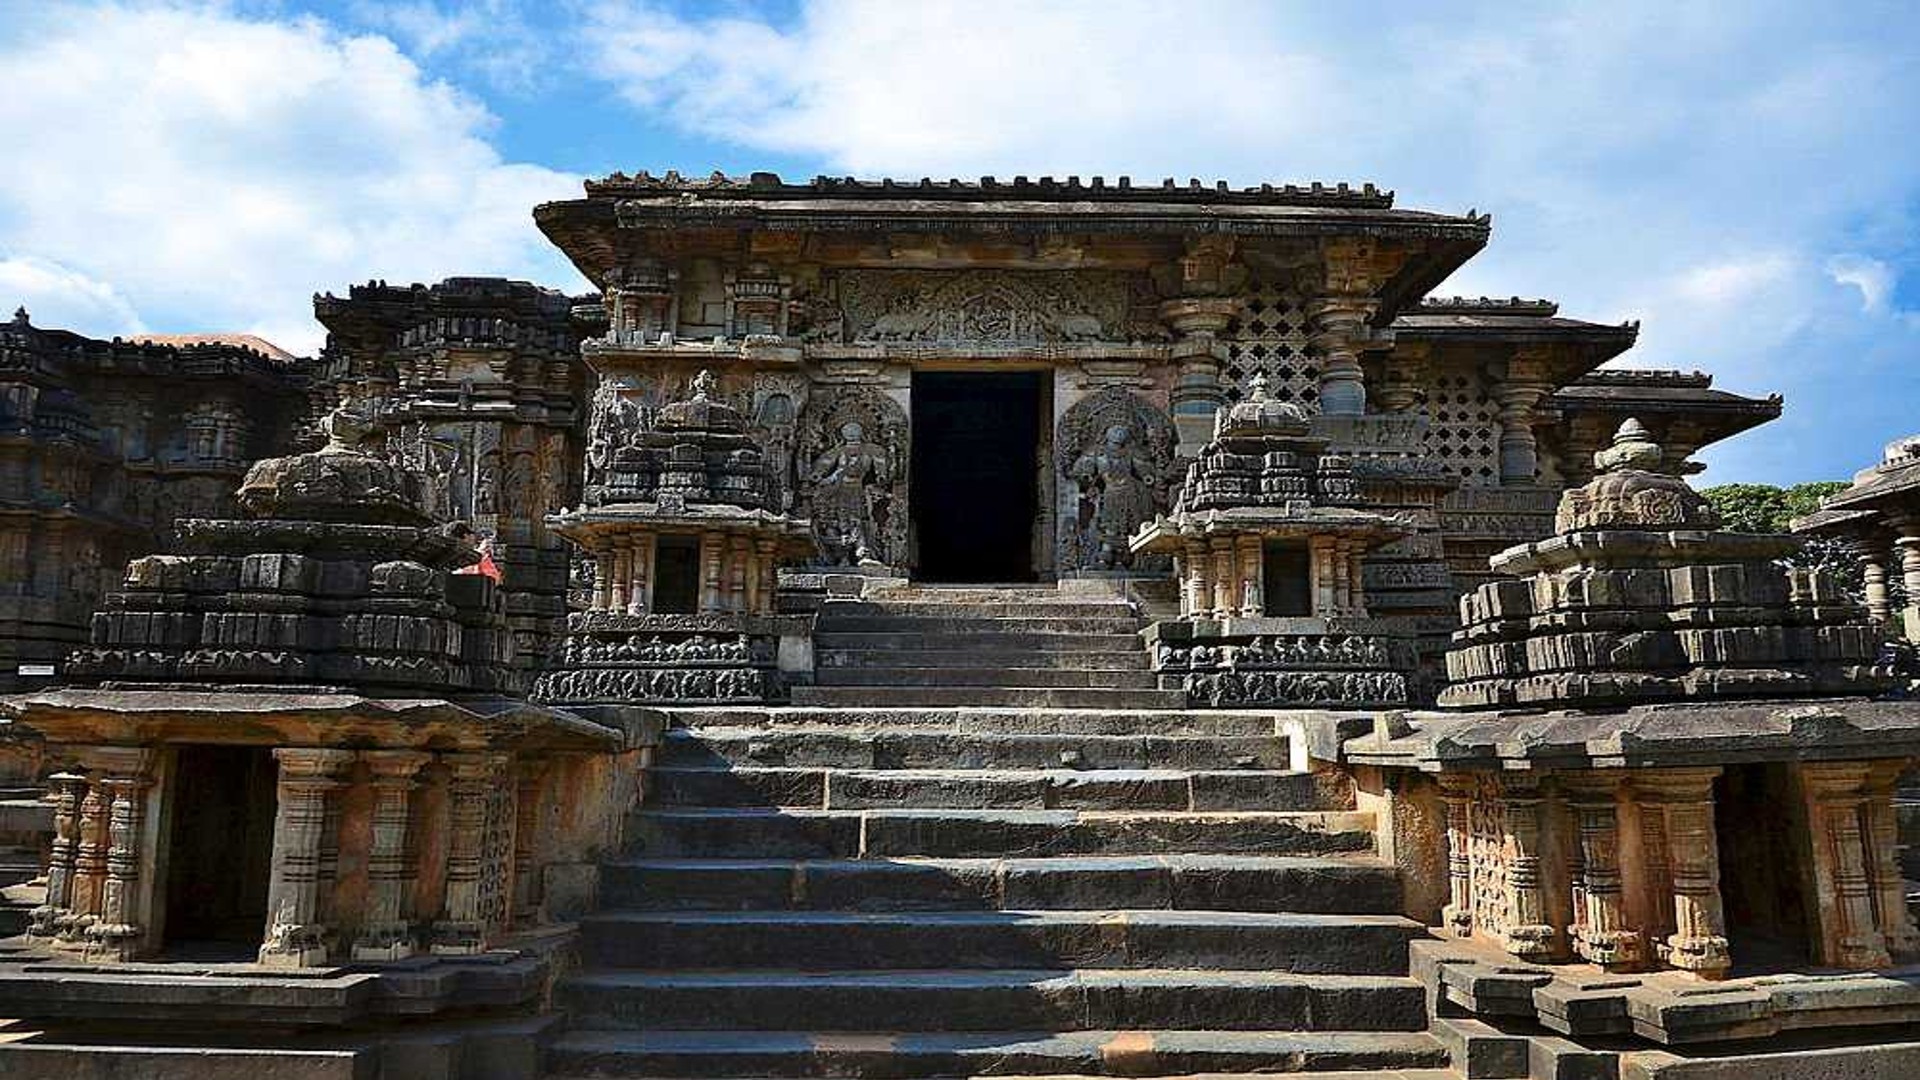 Hoysaleswara temple